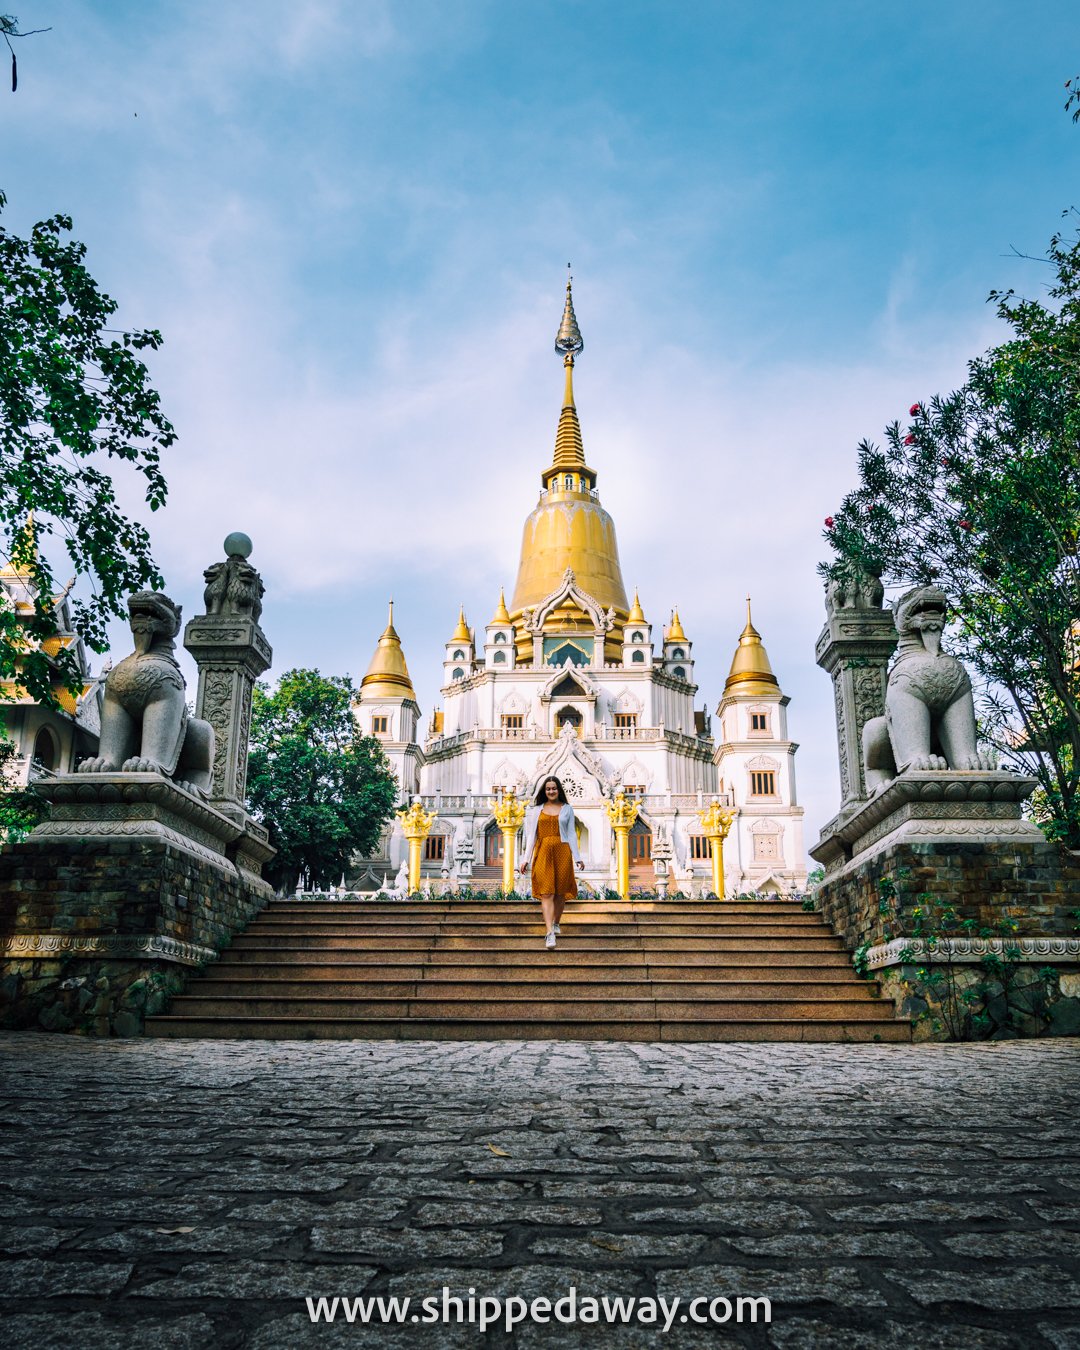 Visiting Buu Long Pagoda in Ho Chi Minh City in Vietnam